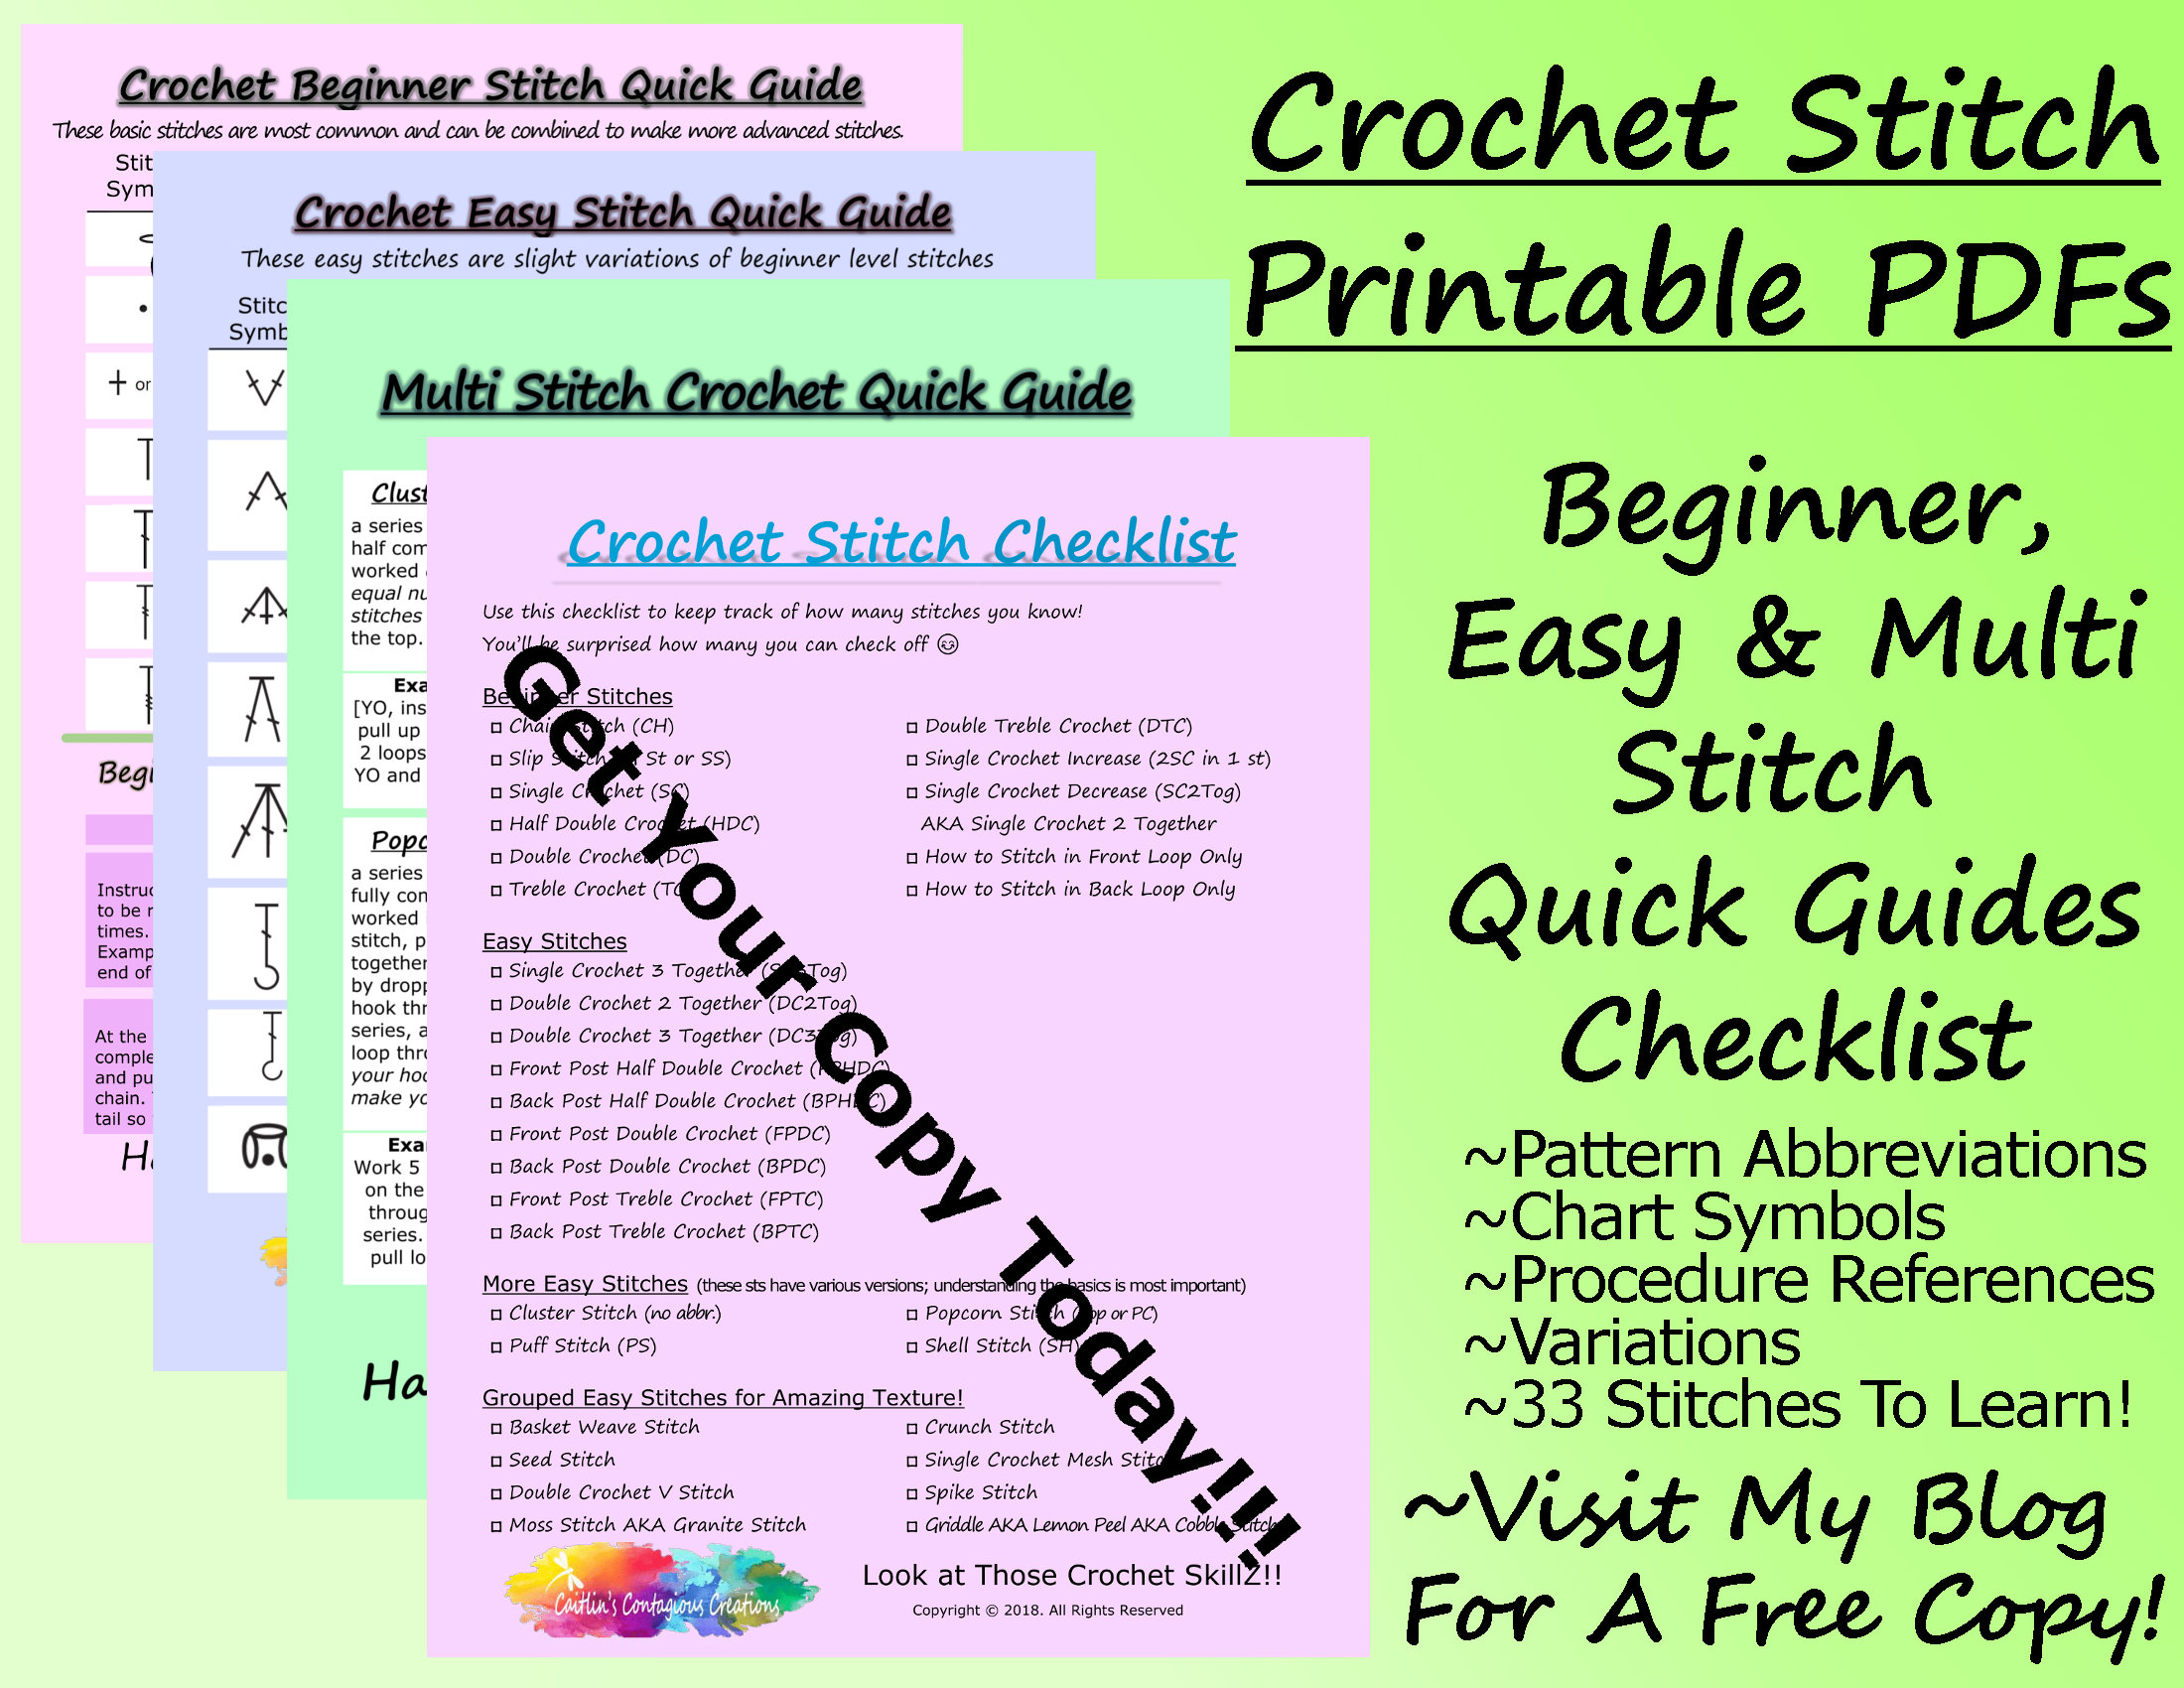 Creekside Crochet: Technical Tuesday - Liquid Stitch Cheat